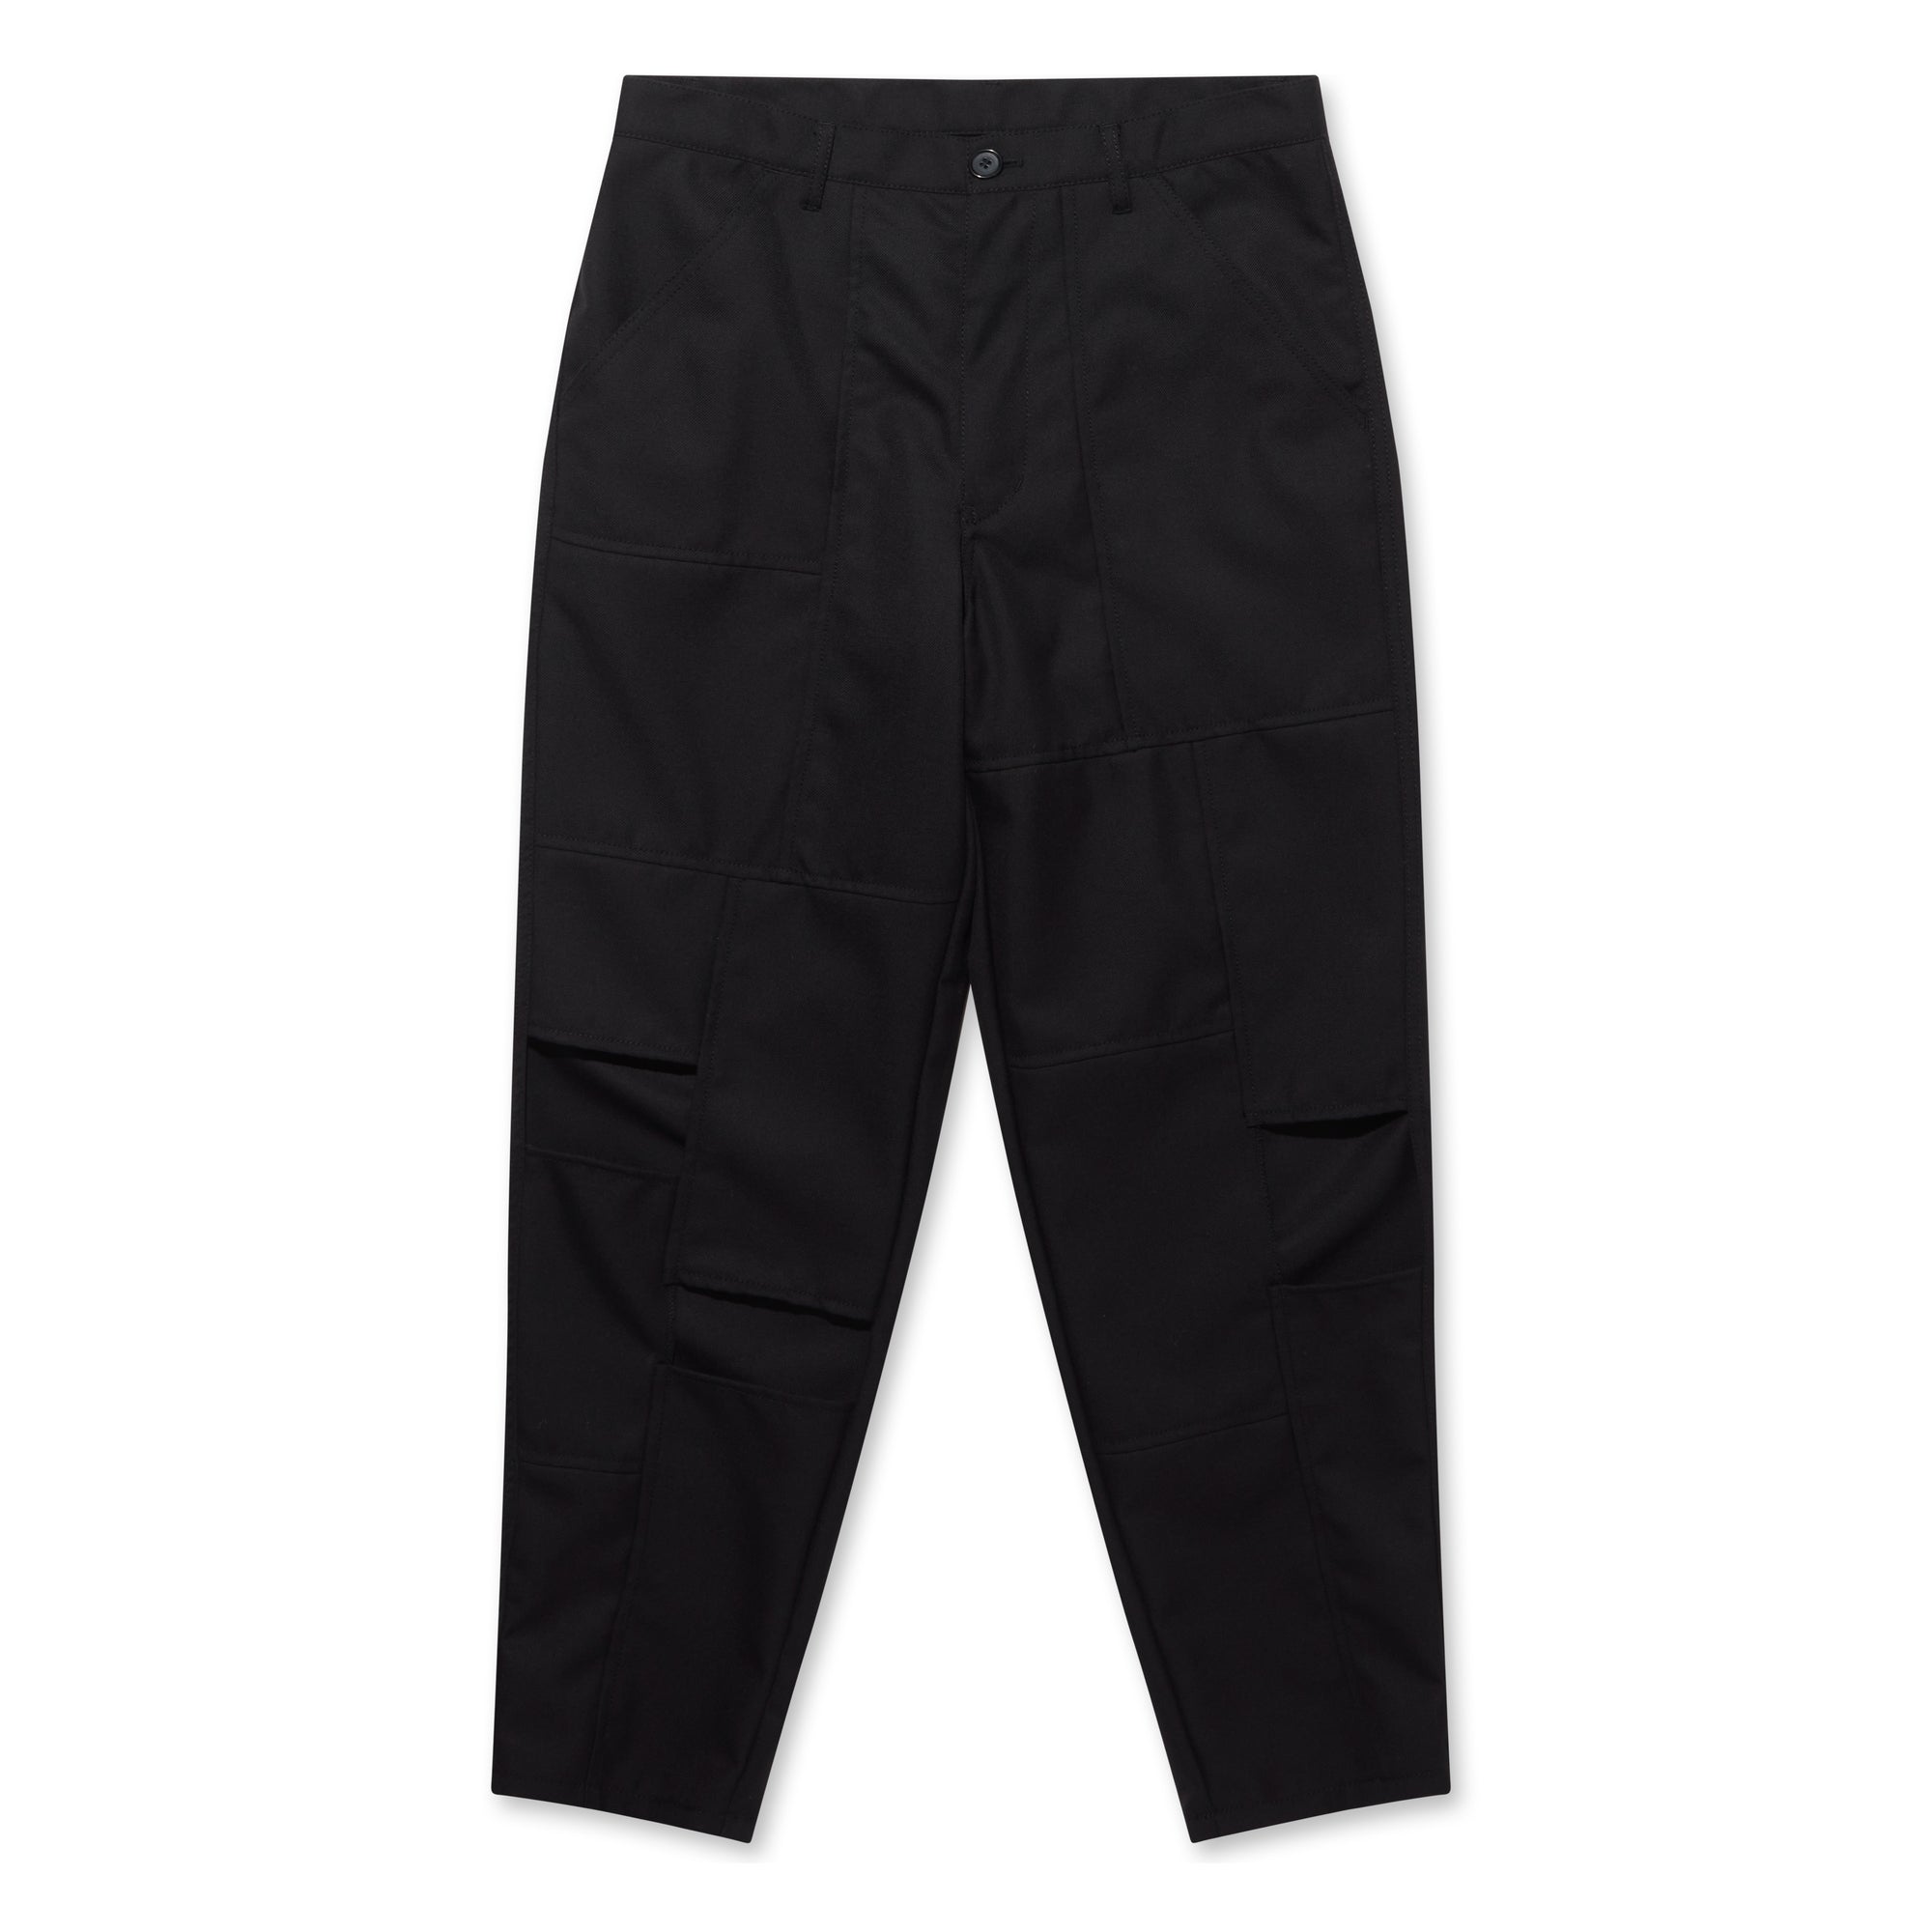 CDG Shirt - Men’s Panelled Pants - (Black) view 5